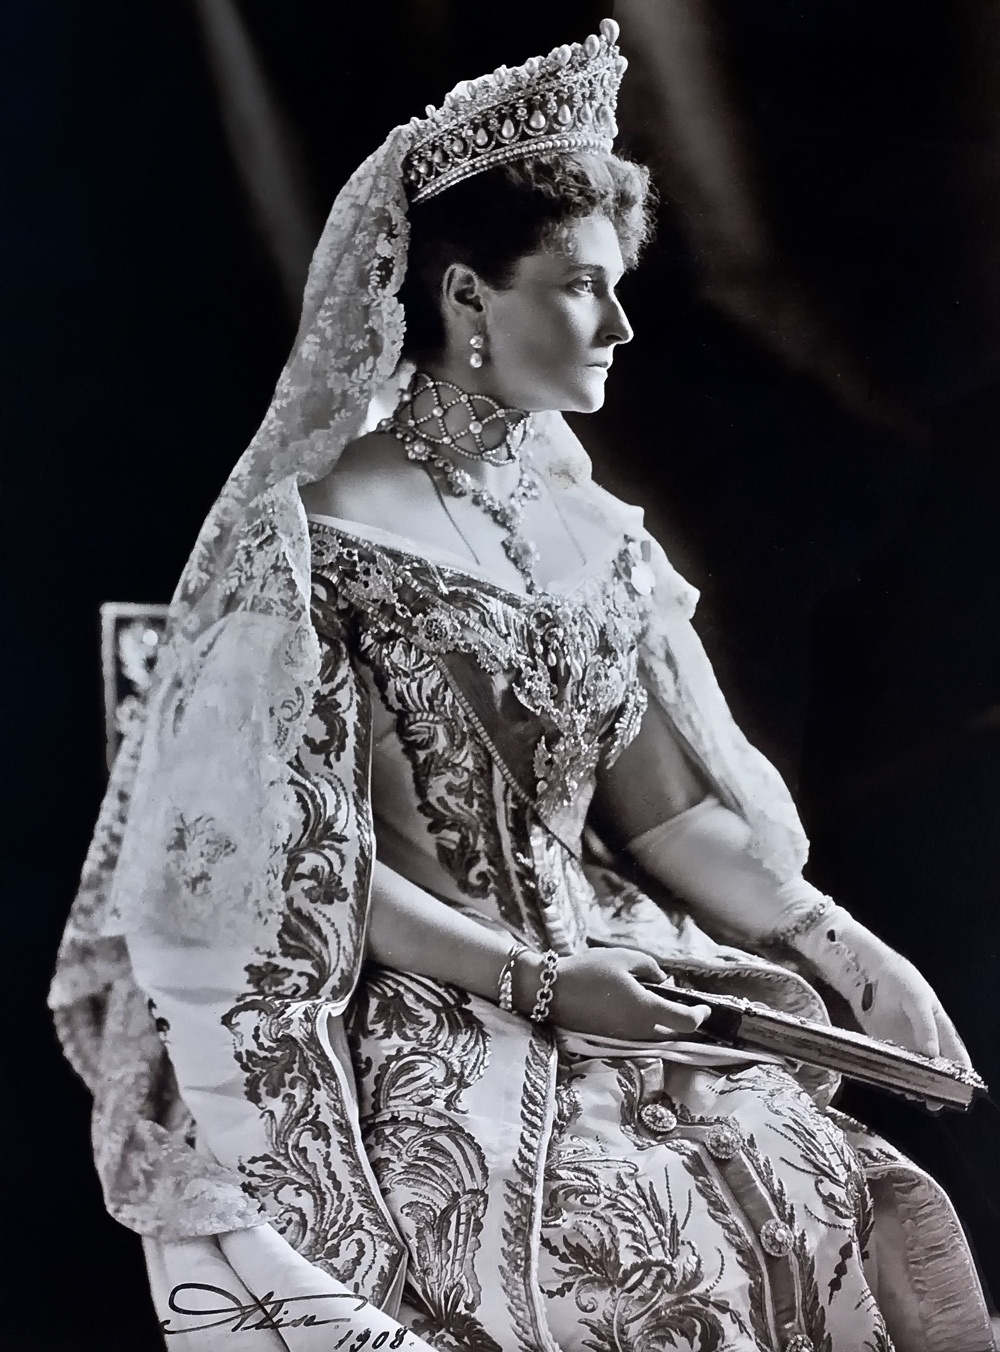 The last Russian Empress Alexandra Feodorovna, spouse of Nicholas II